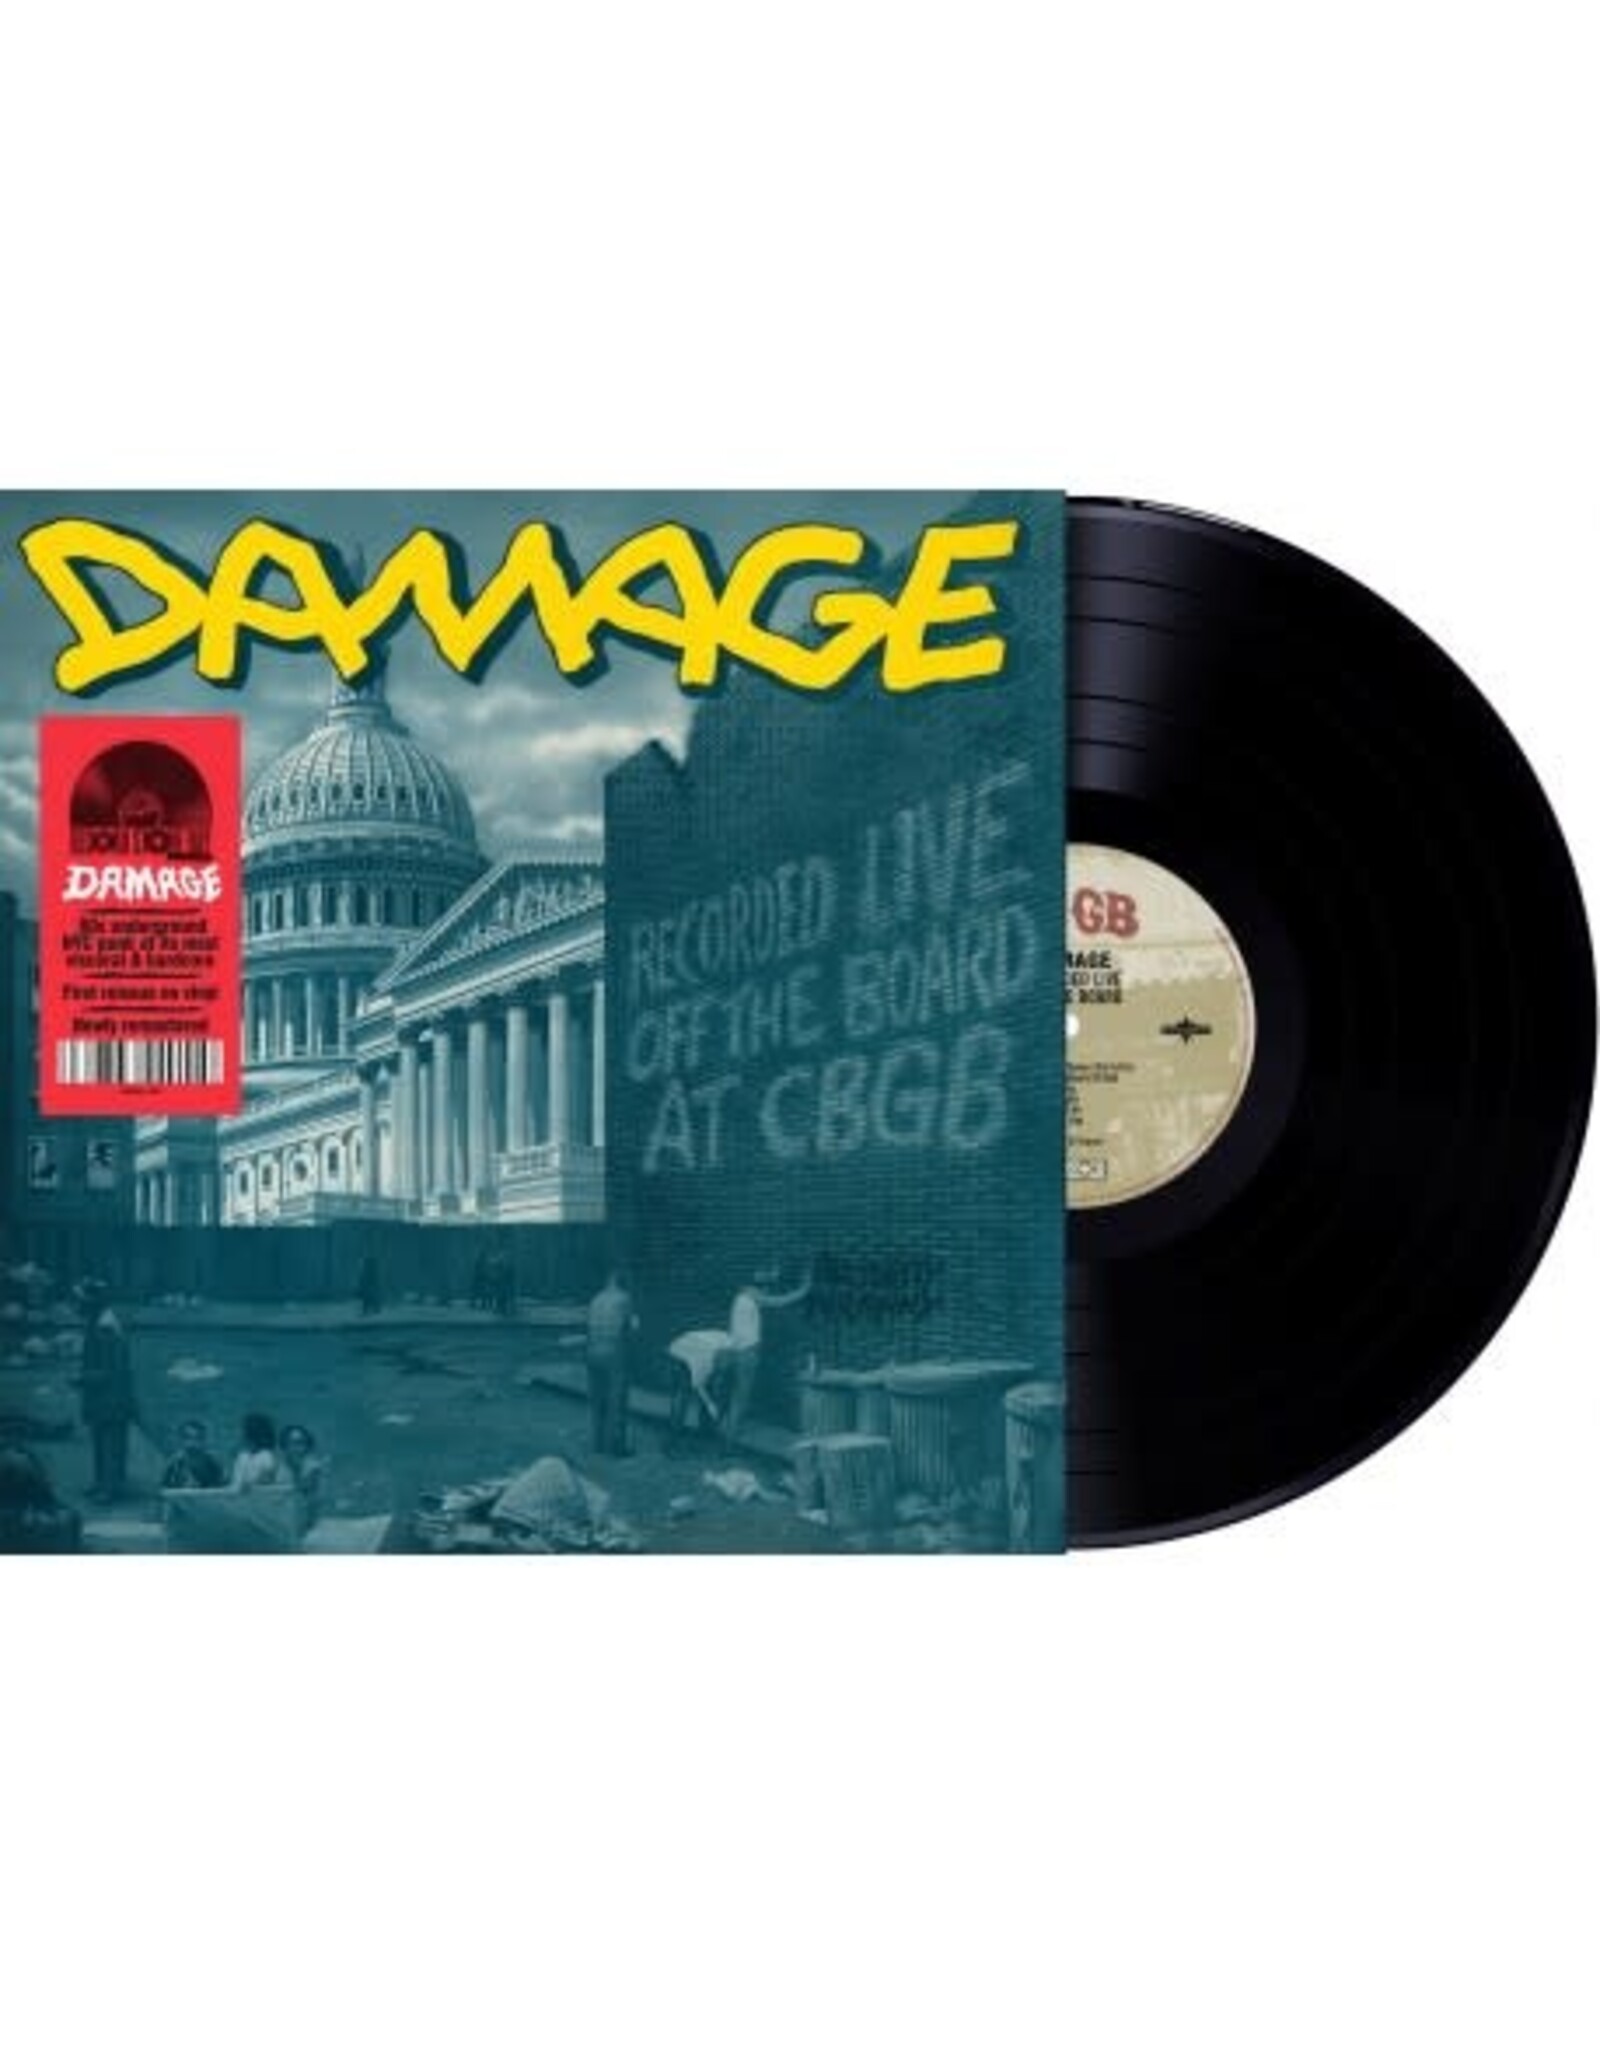 Damage - Recorded Live Off The Board At CBGB (Record Store Day)